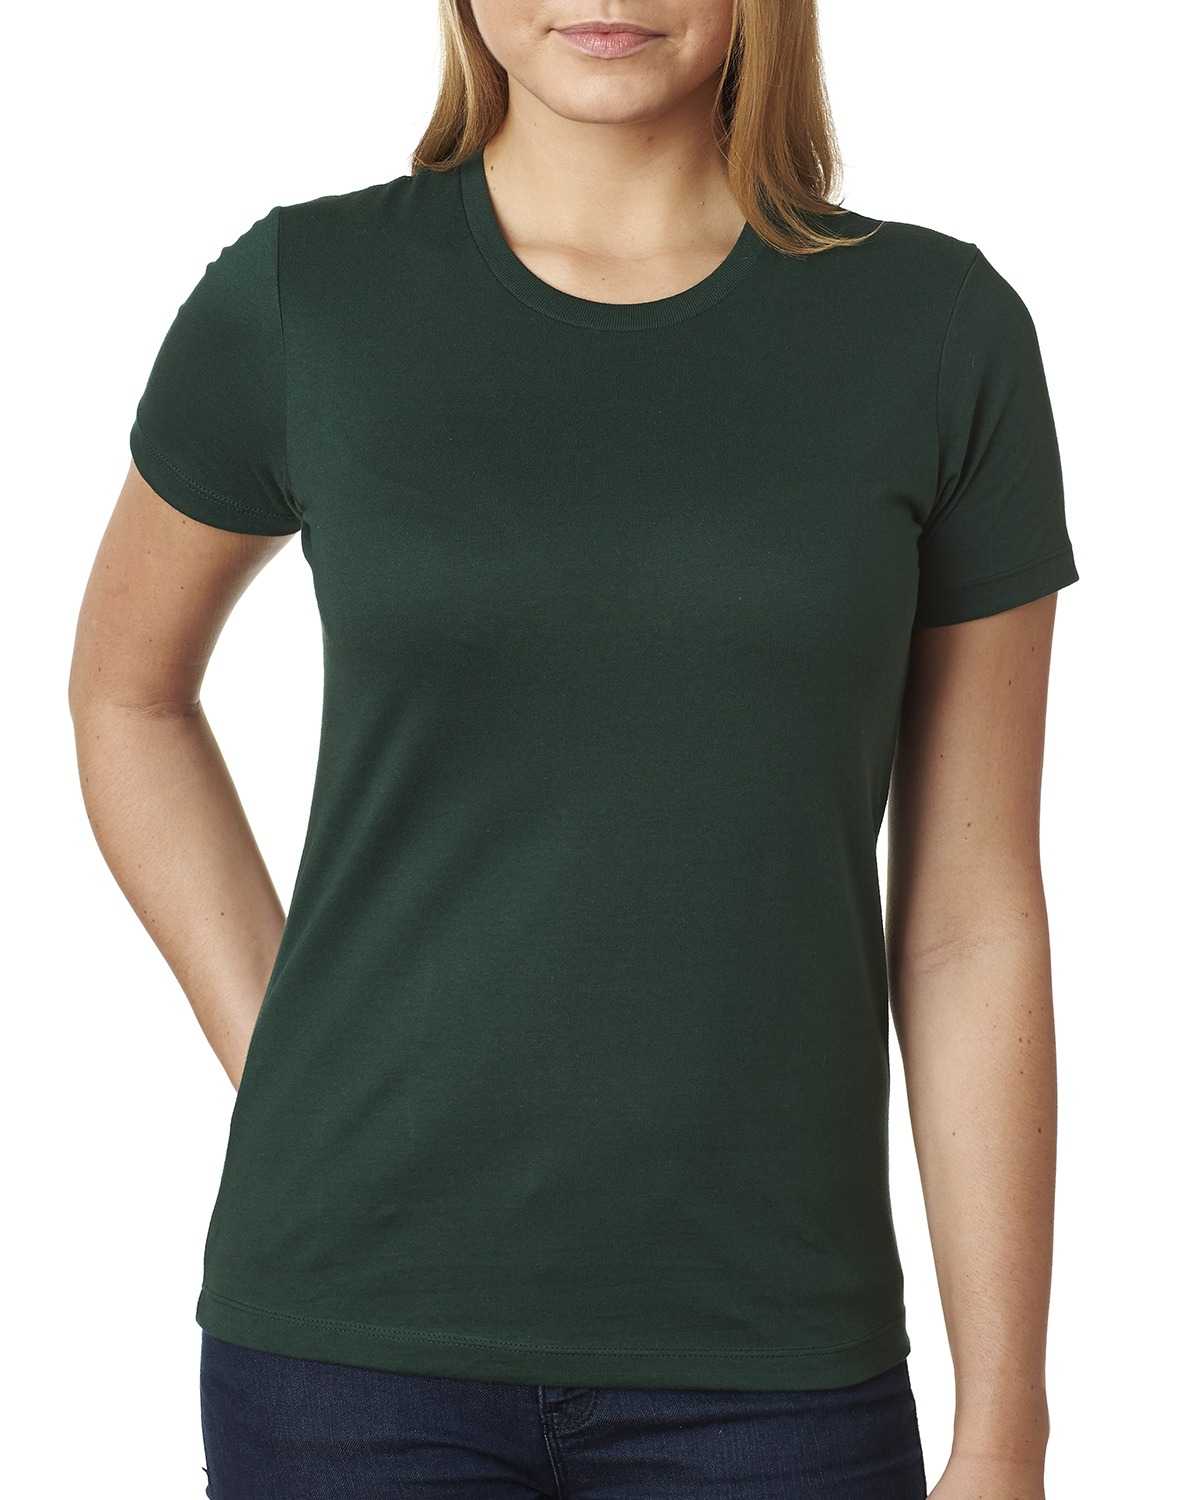 Next Level N3900 Ladies' Boyfriend T-Shirt | ApparelChoice.com